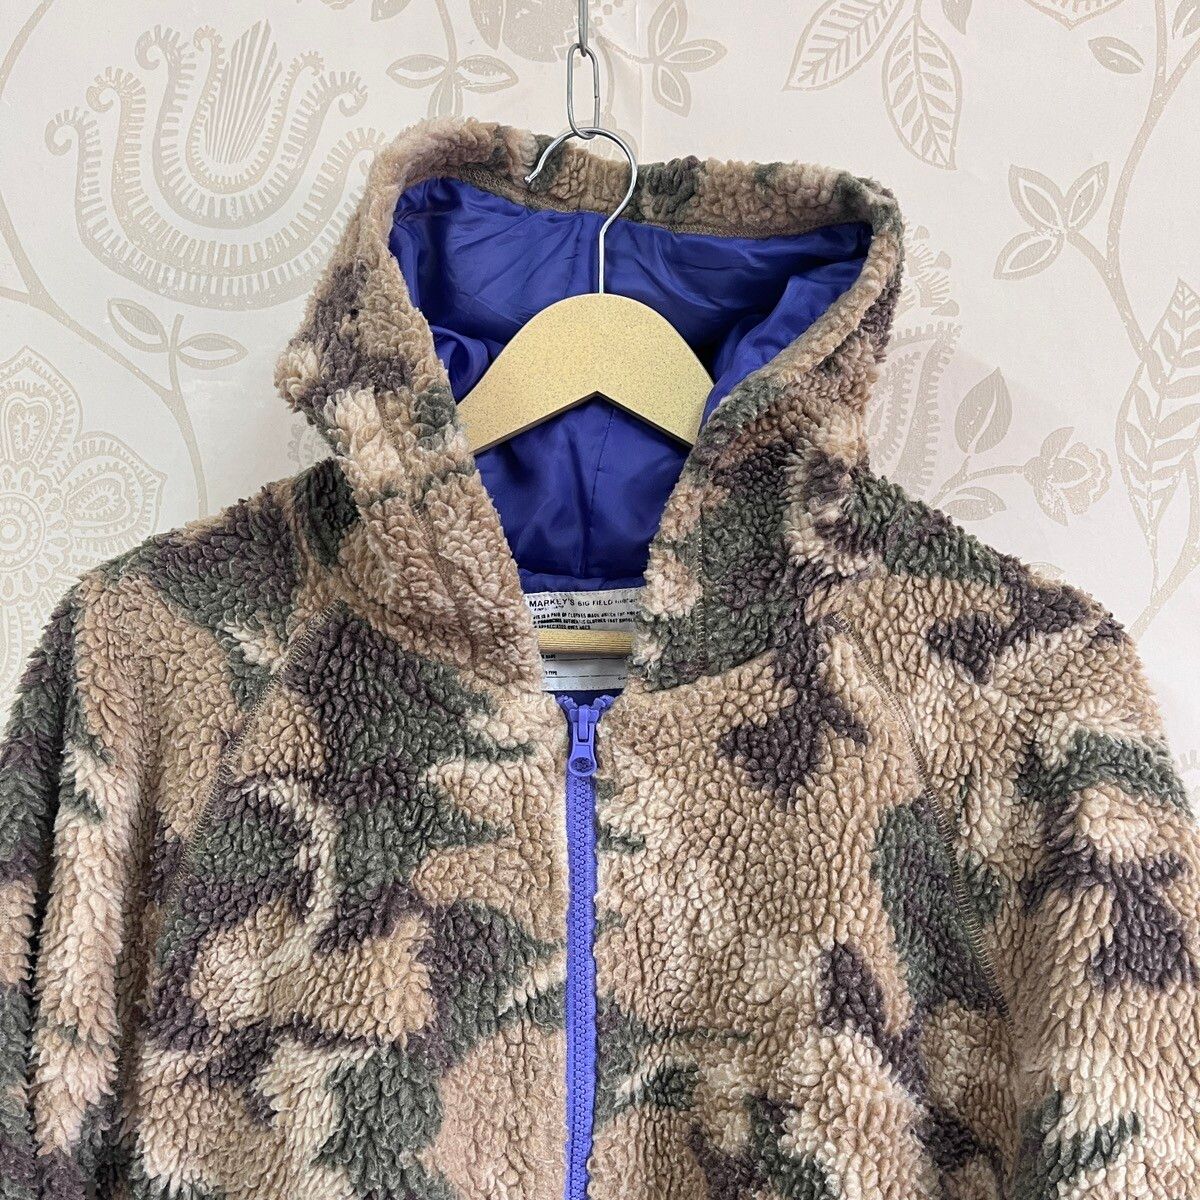 Military - Markey's Big Field Camouflage Sweater Hoodie Japanese - 18